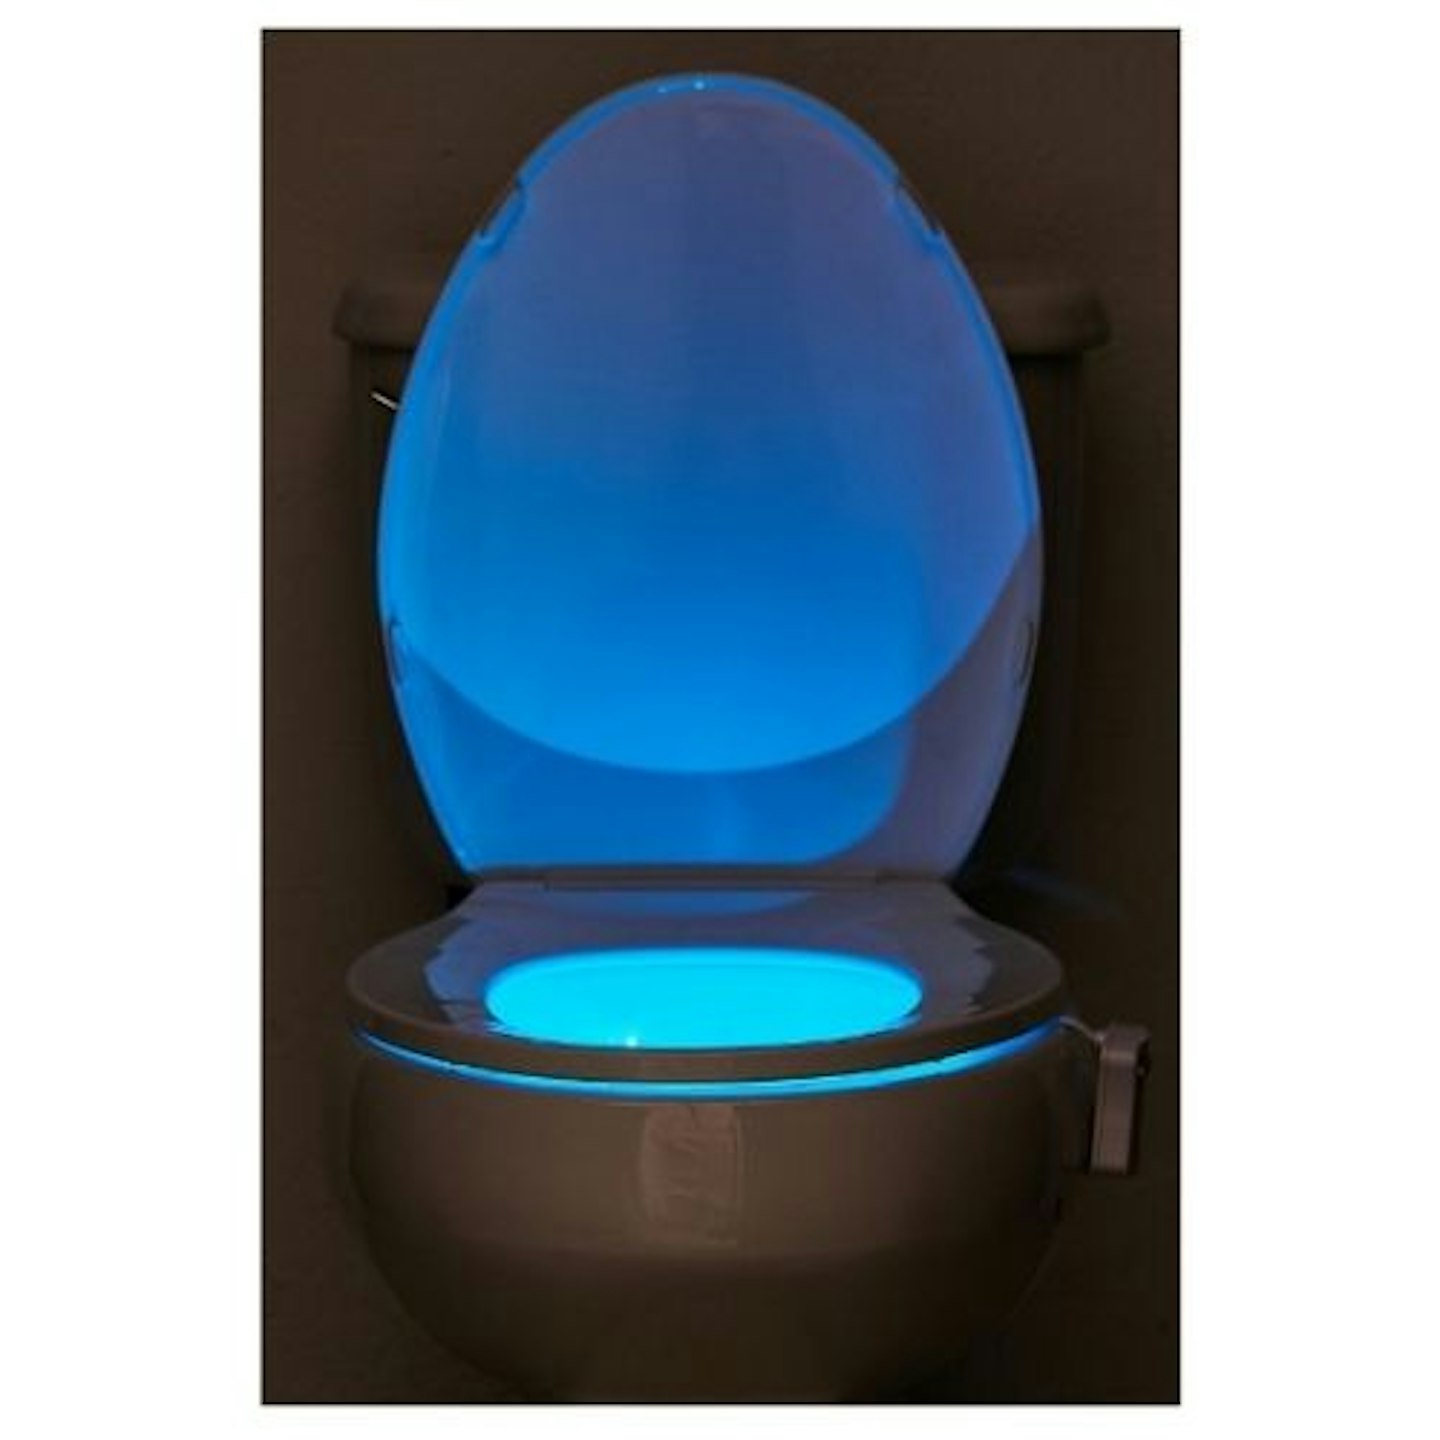 LED Toilet Bowl Light in a toilet